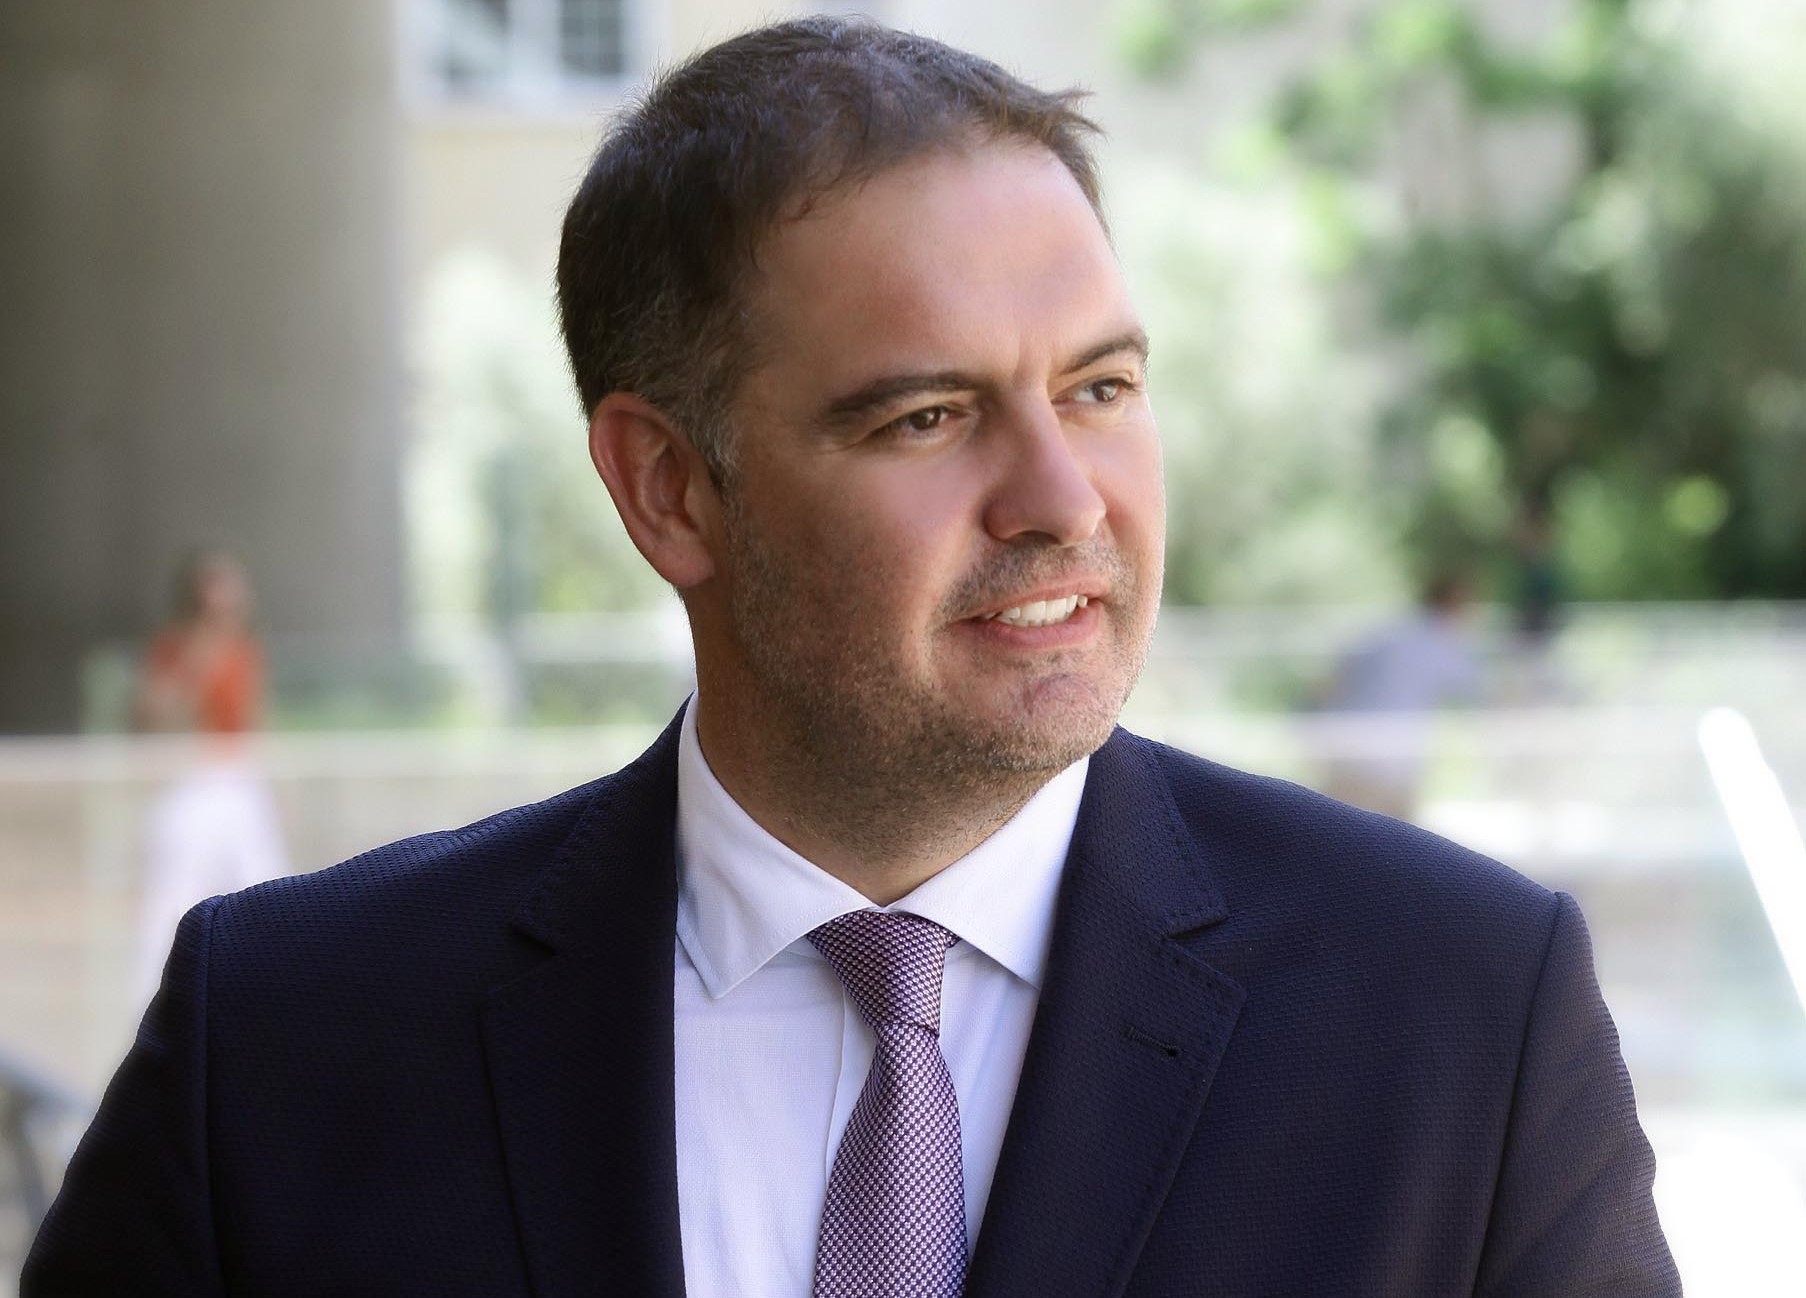 Alexandros Vassilikos is the new president of HOTREC